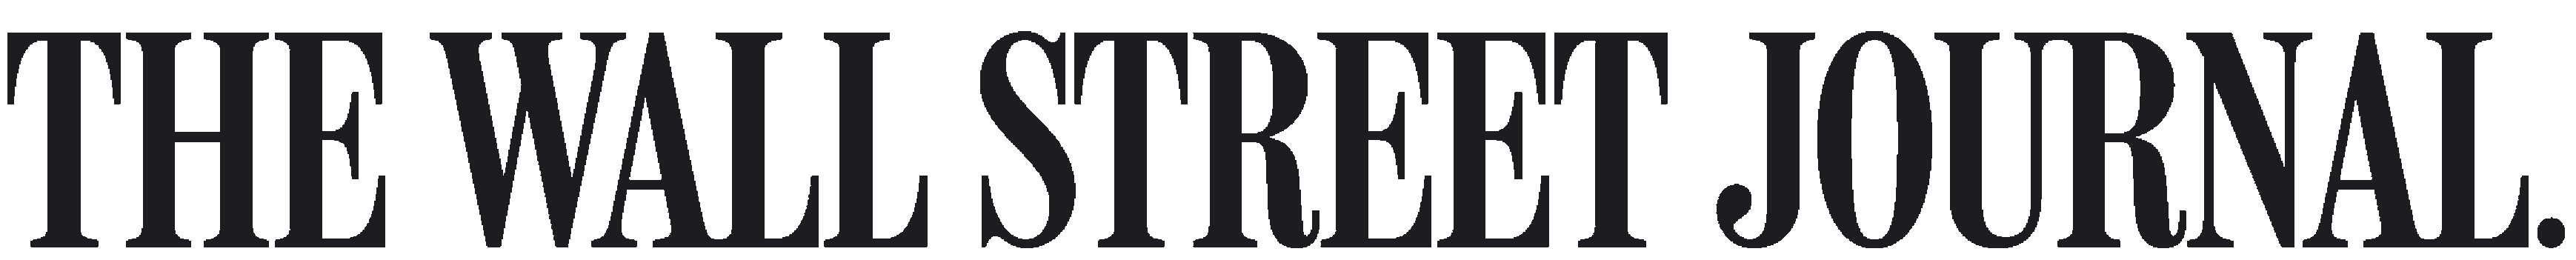 The Wall Street Journal Corp. Logo